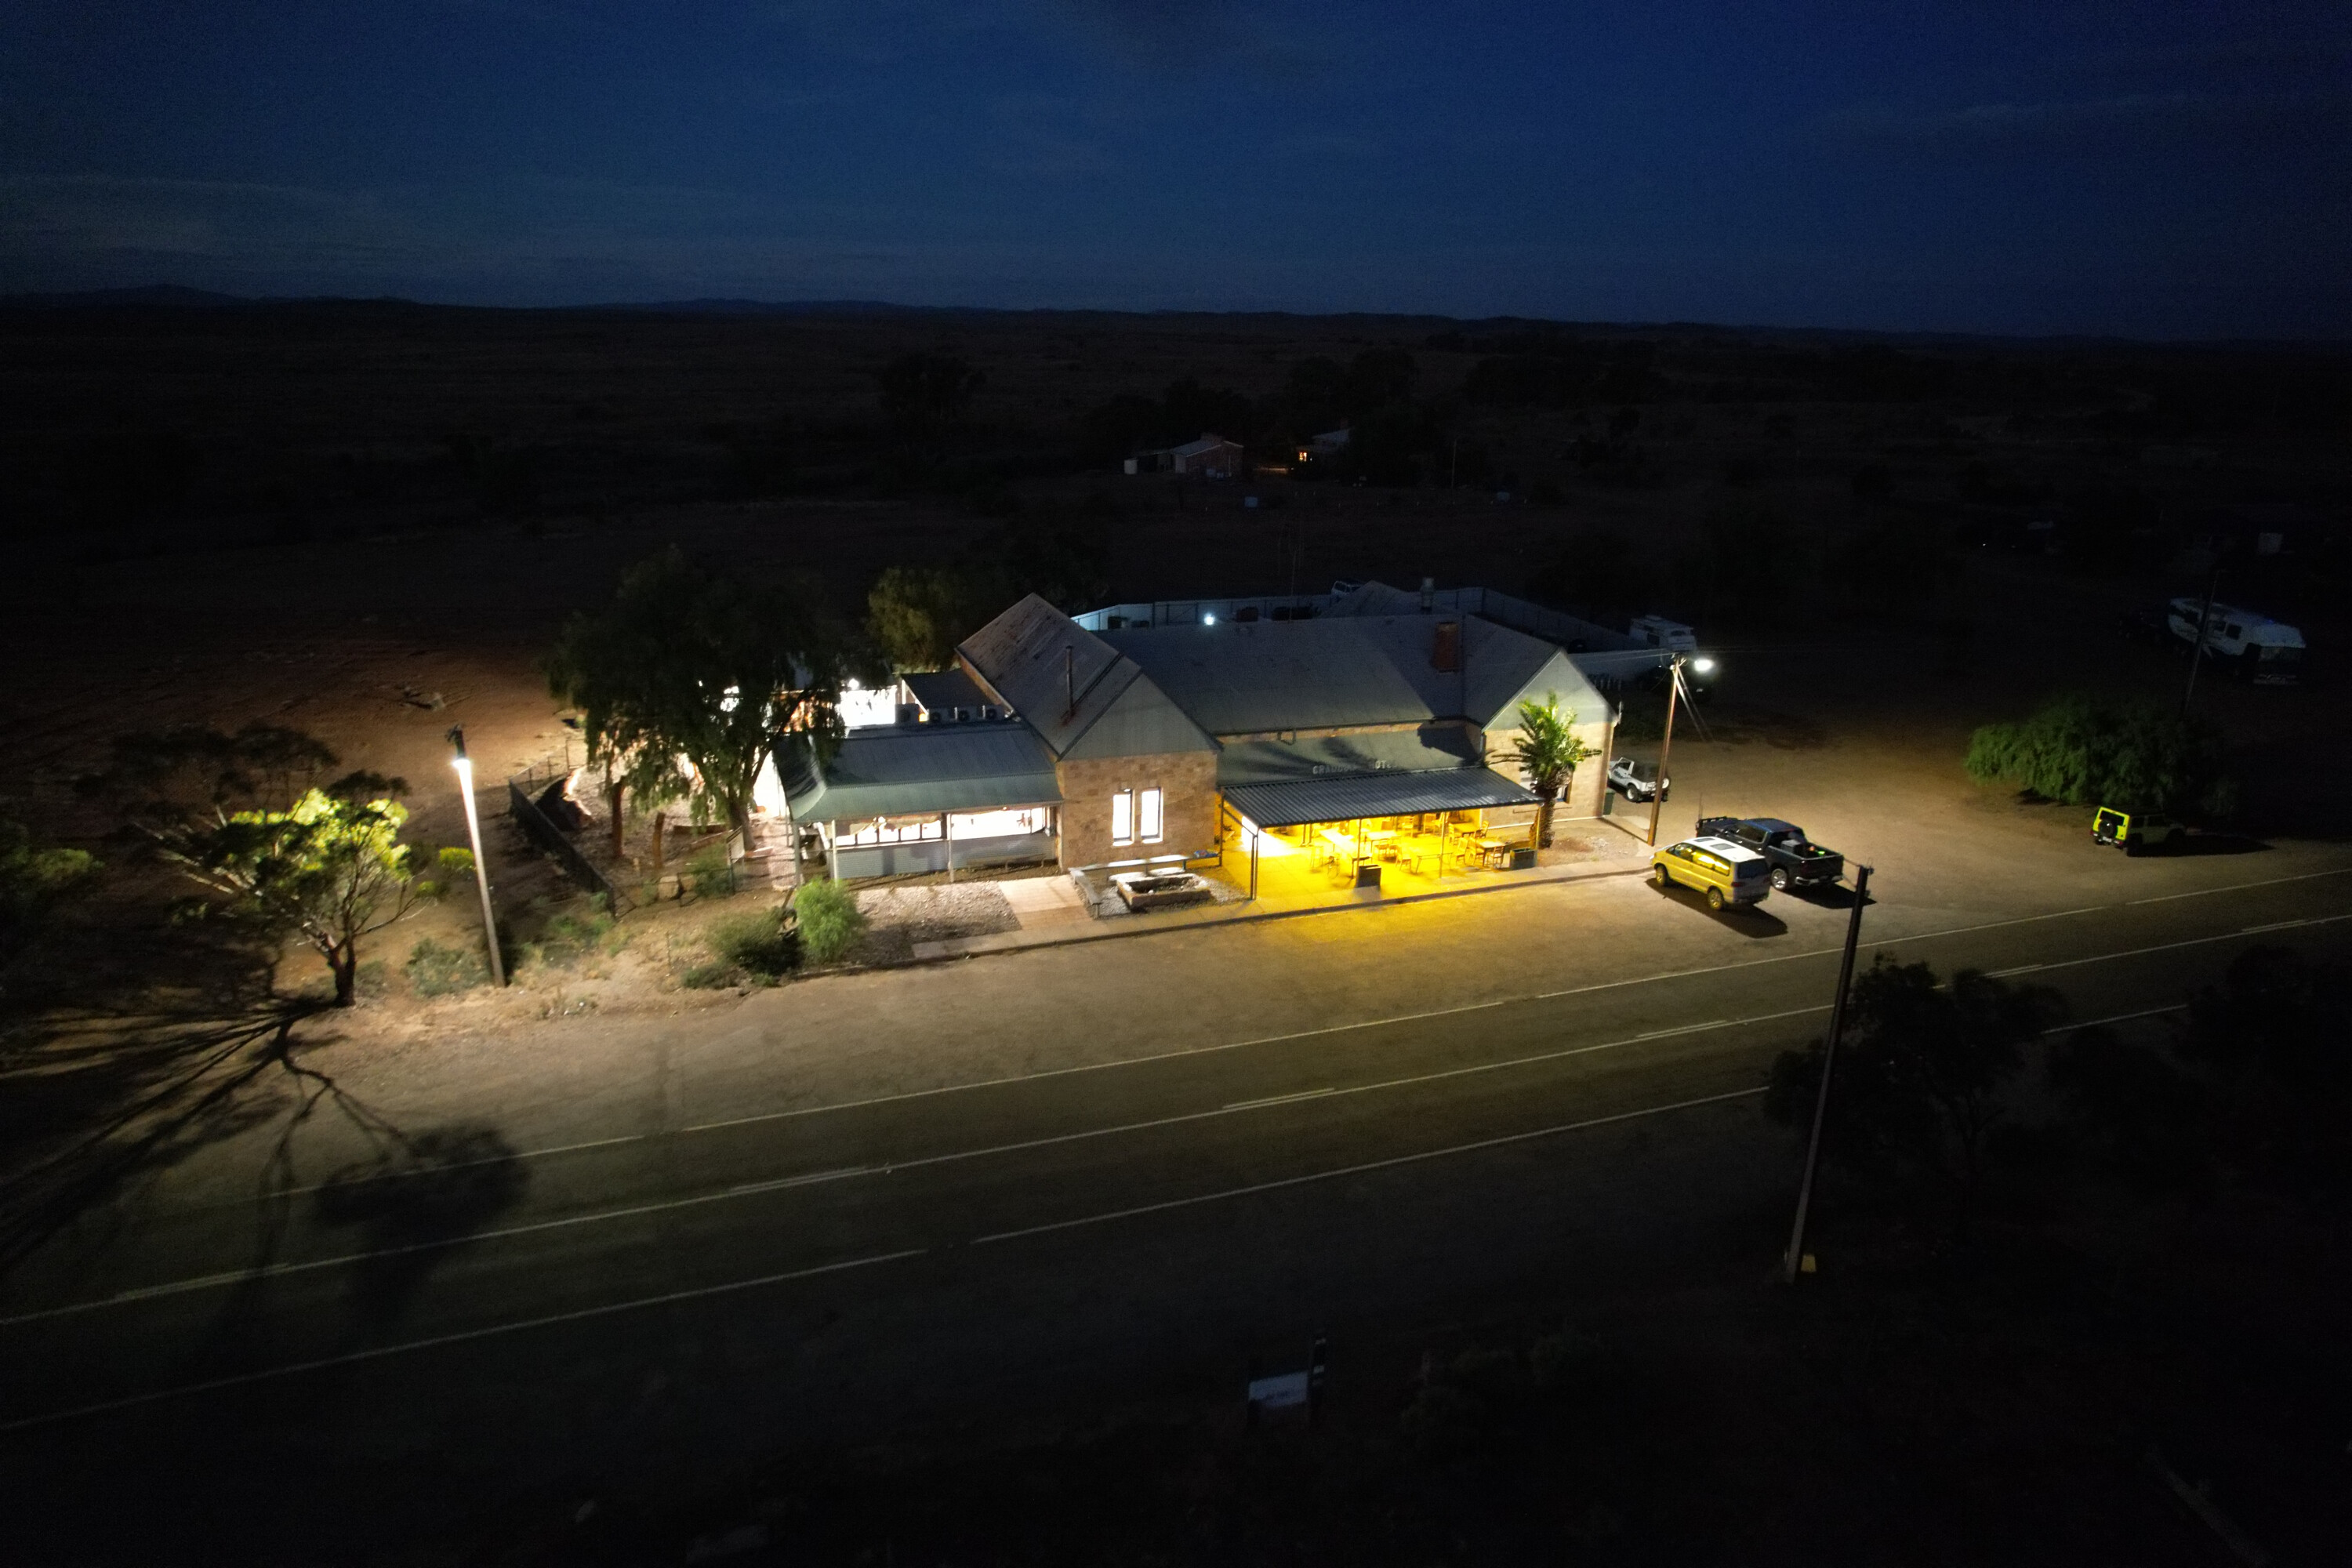 761f269f/night drone front cradock hotel south australia outback pub crawl 4x4 australia JPG